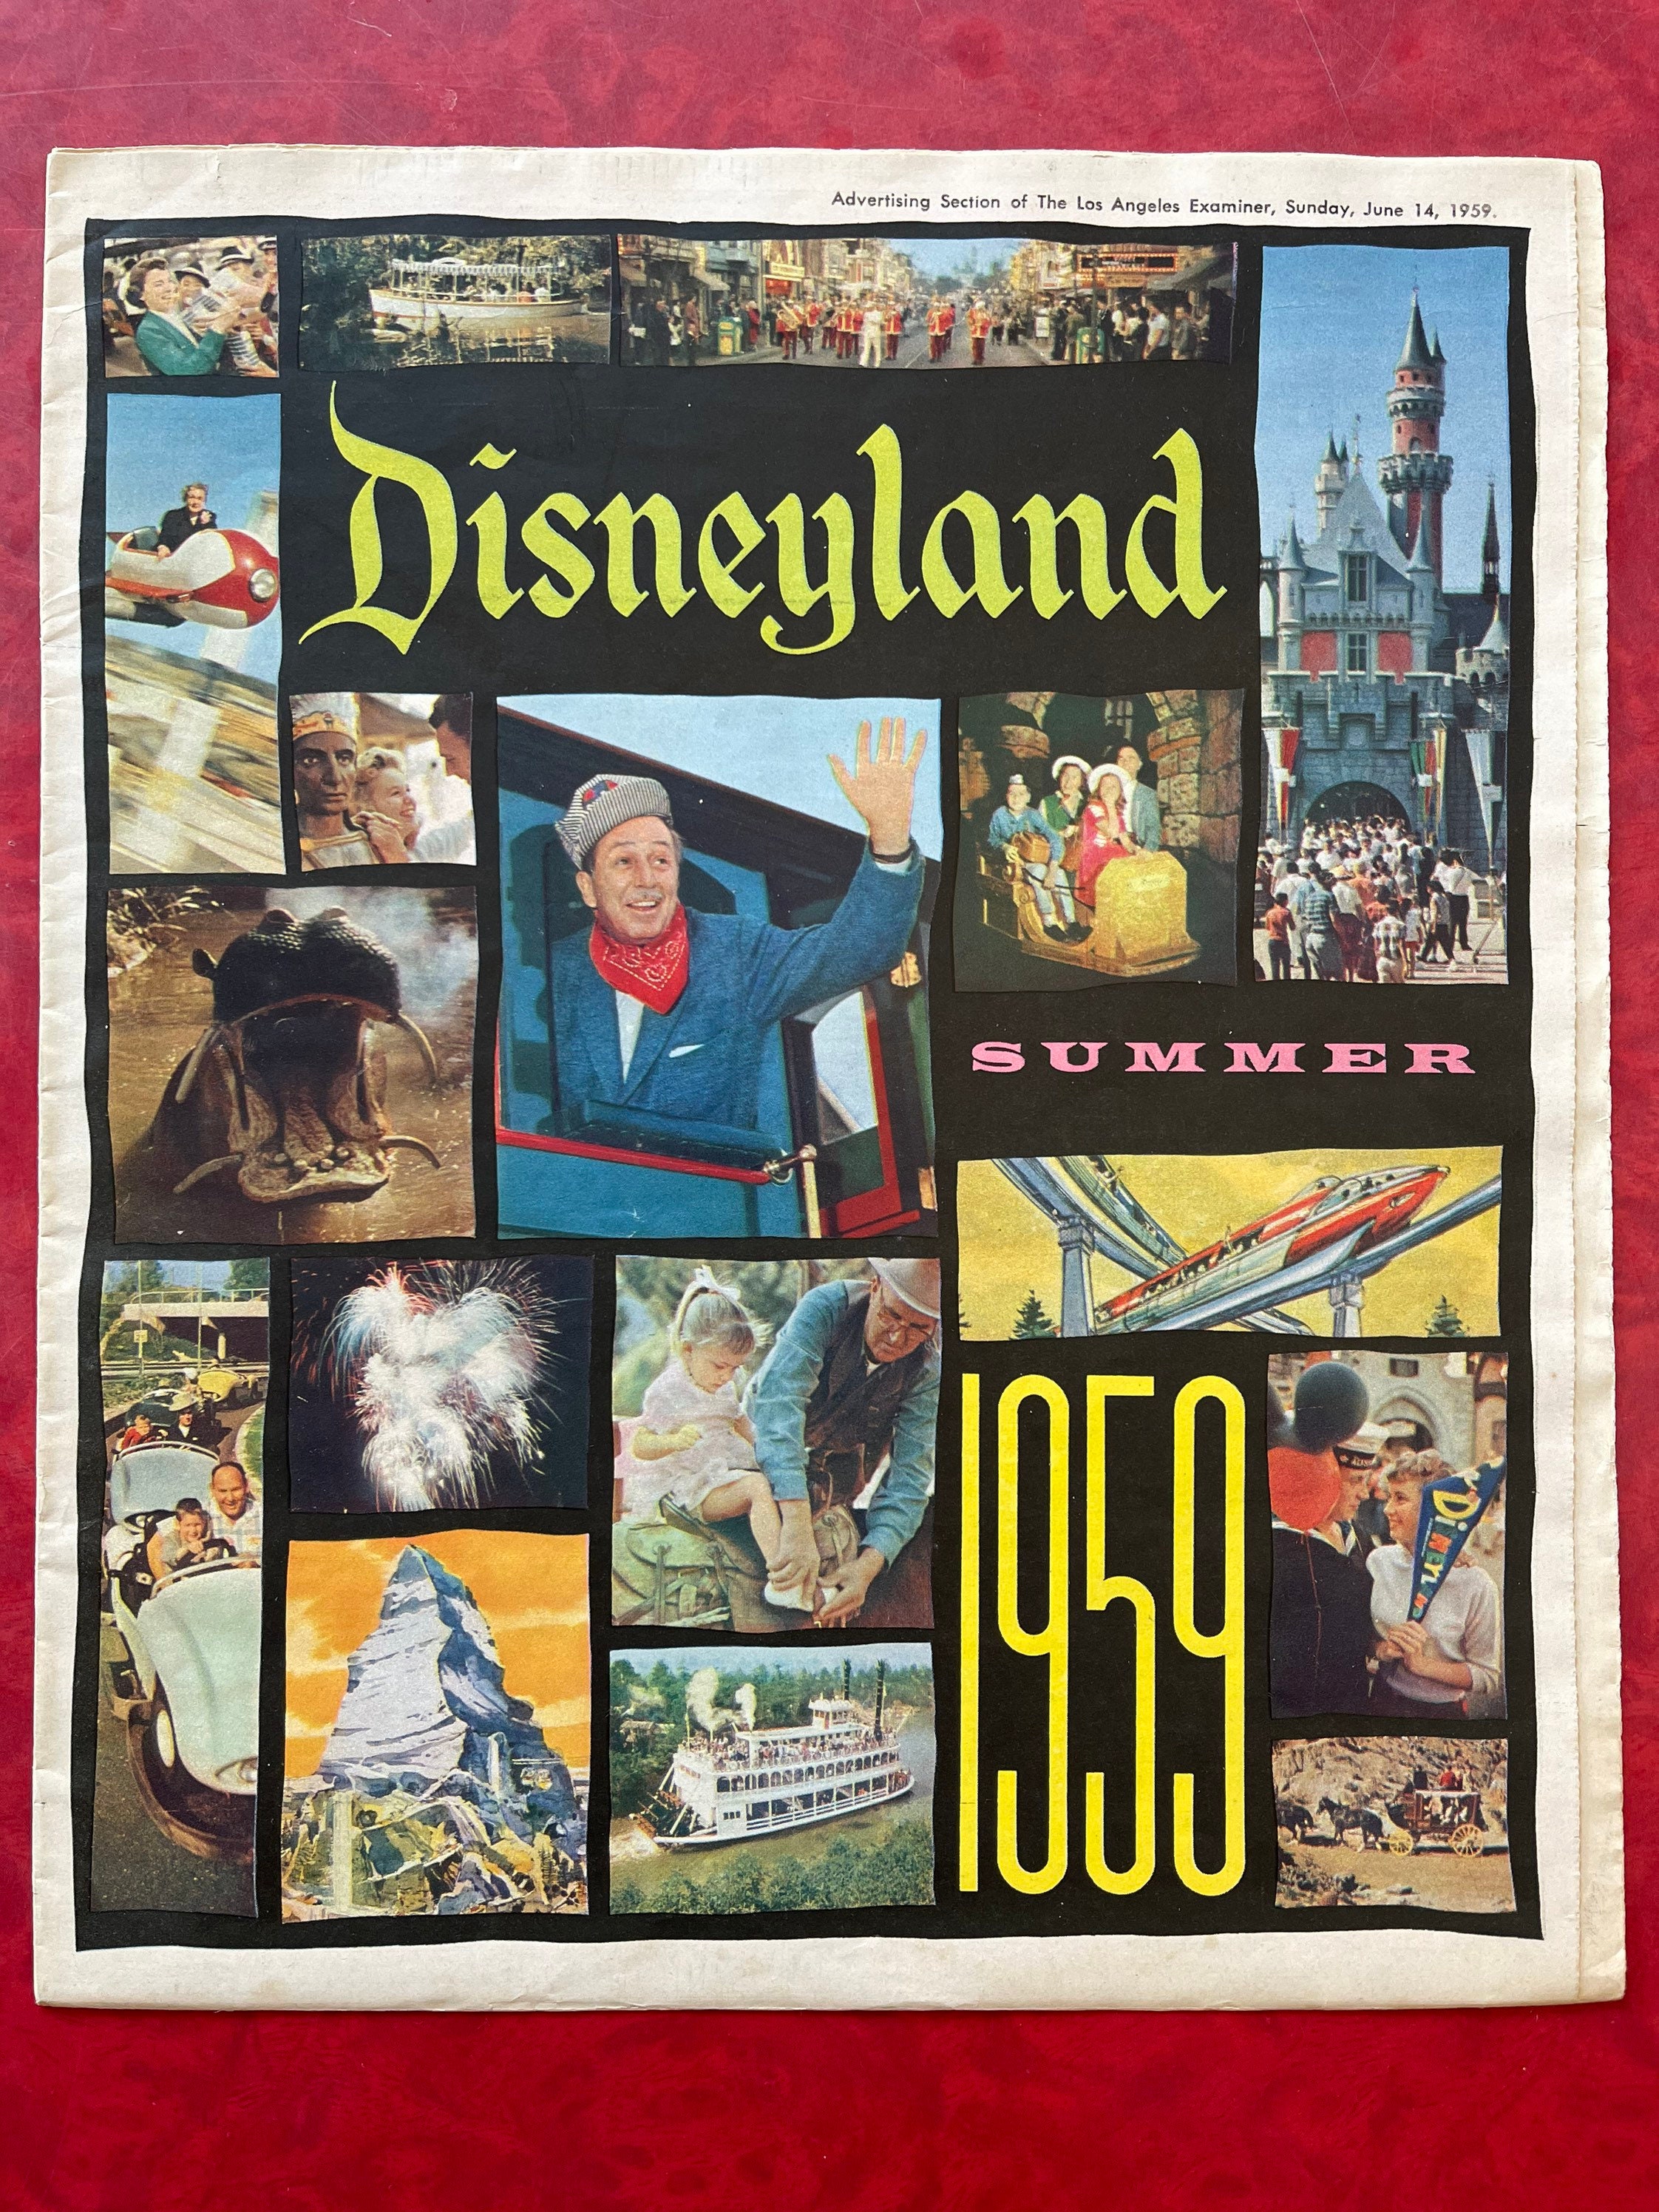 Seattle Design Center 1990s souvenirs: A big scrapbook and big newspapers